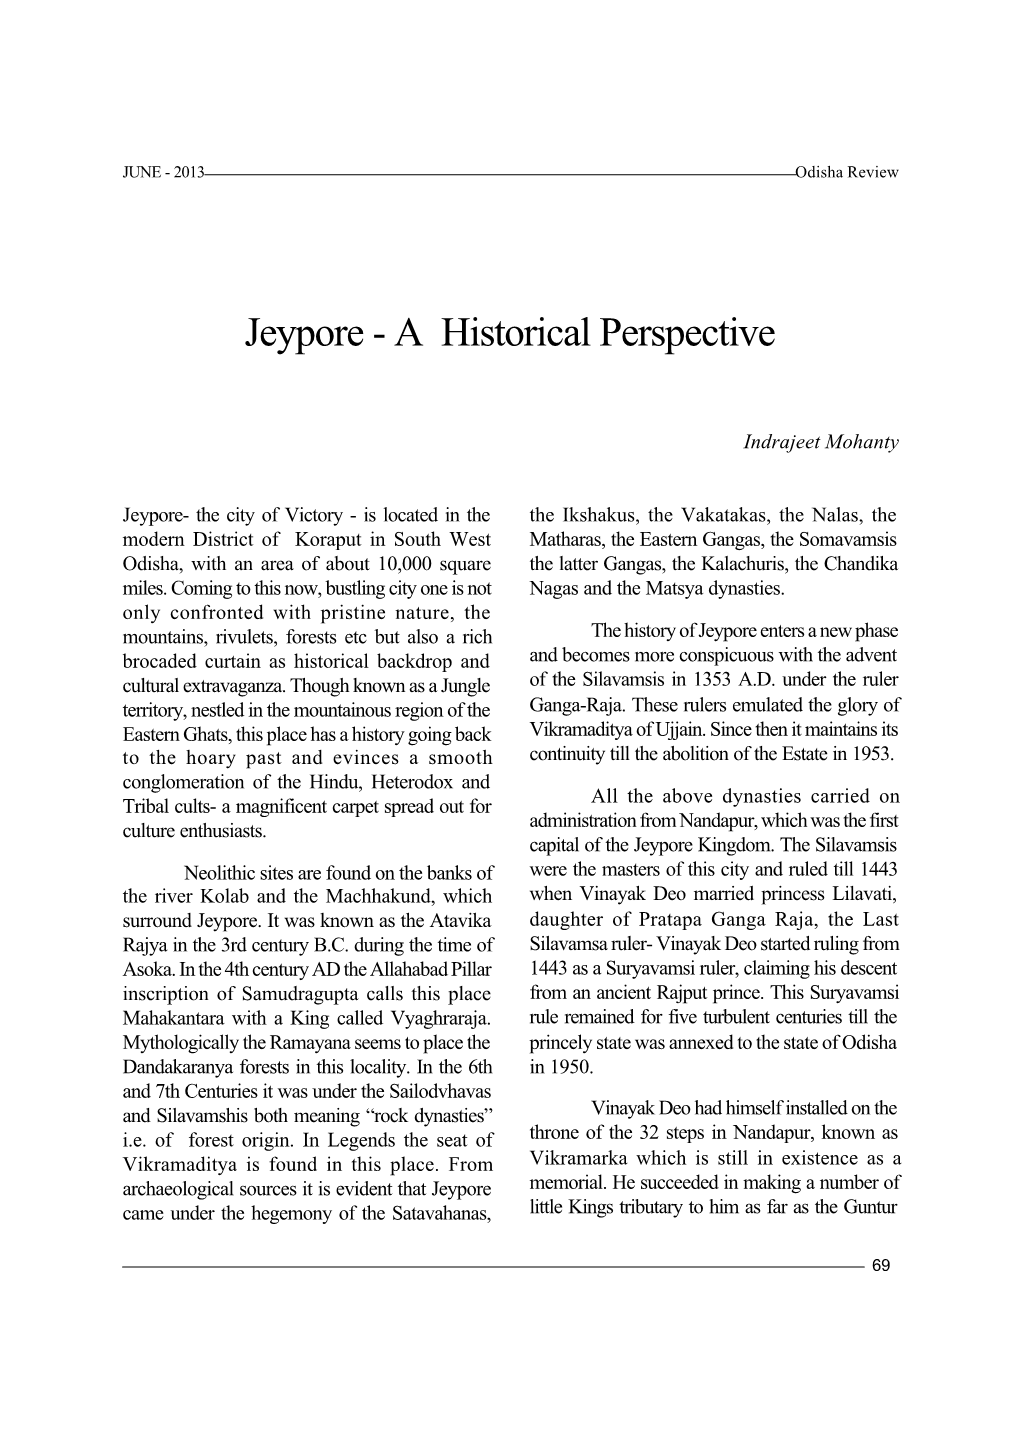 Jeypore - a Historical Perspective